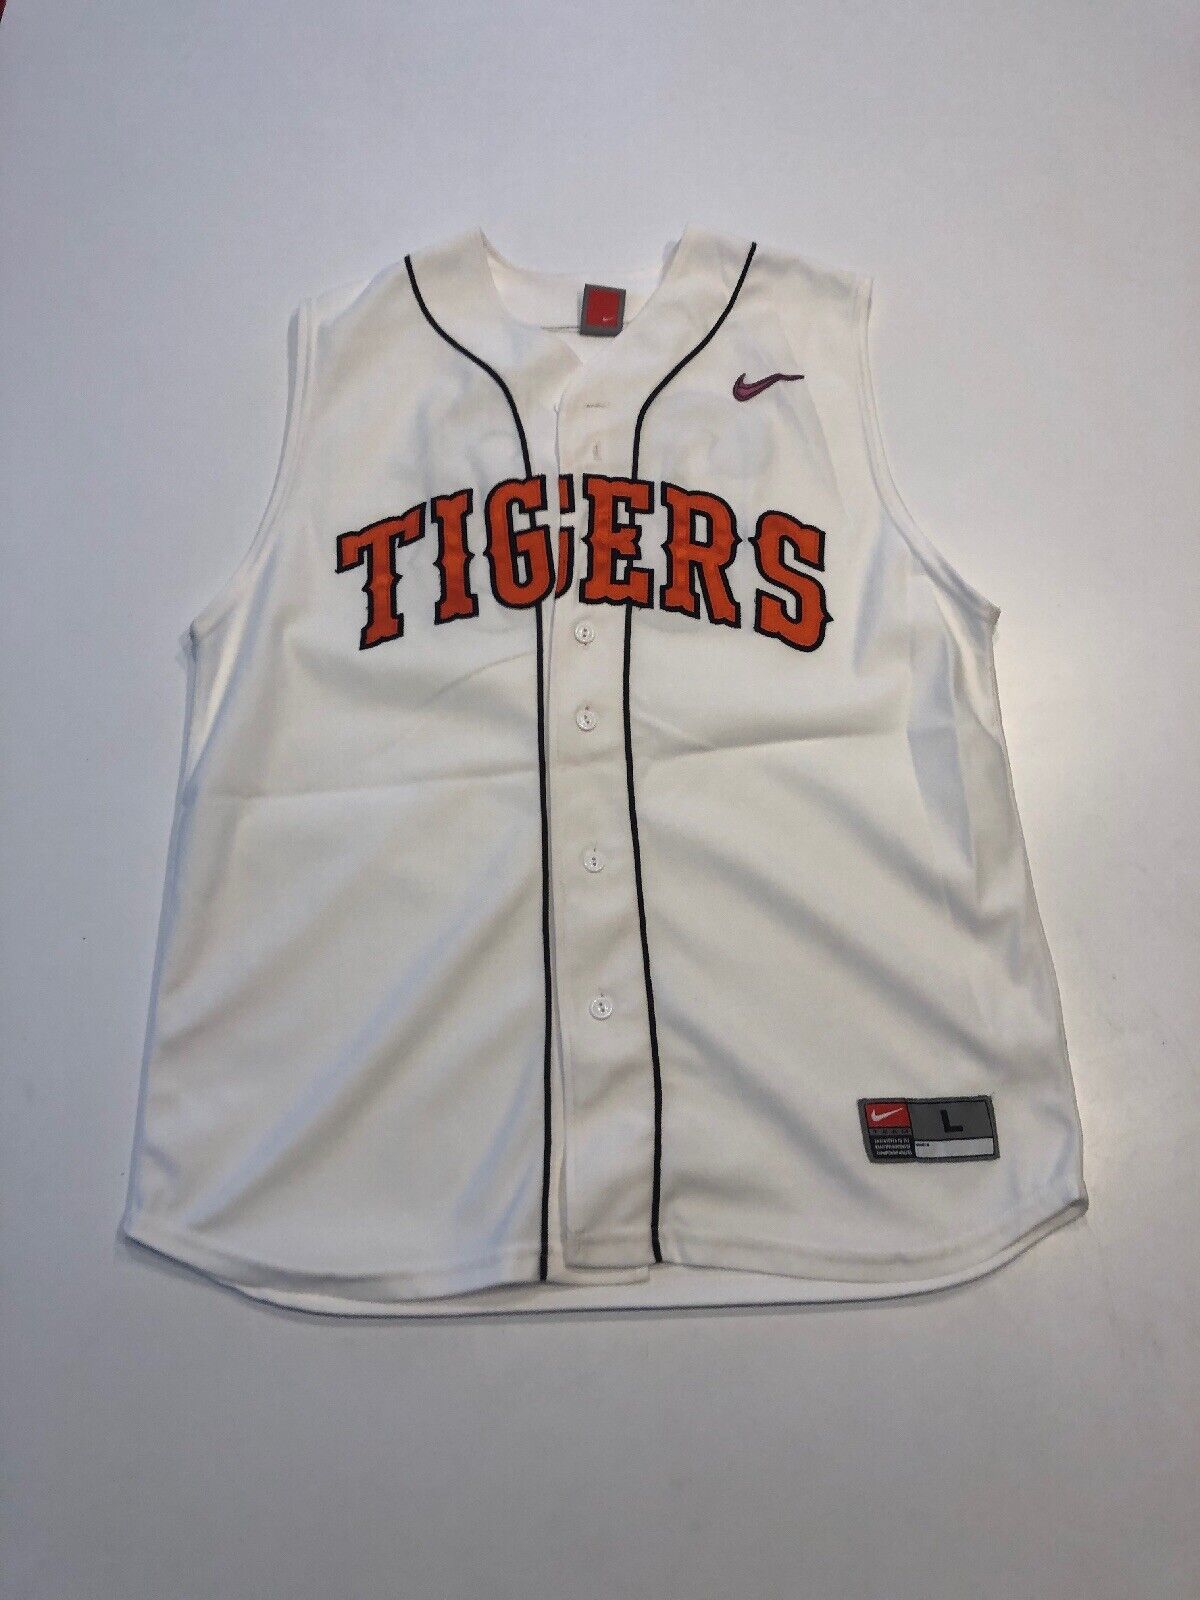 Game Worn Used Princeton Tigers Baseball Jersey Size L #28